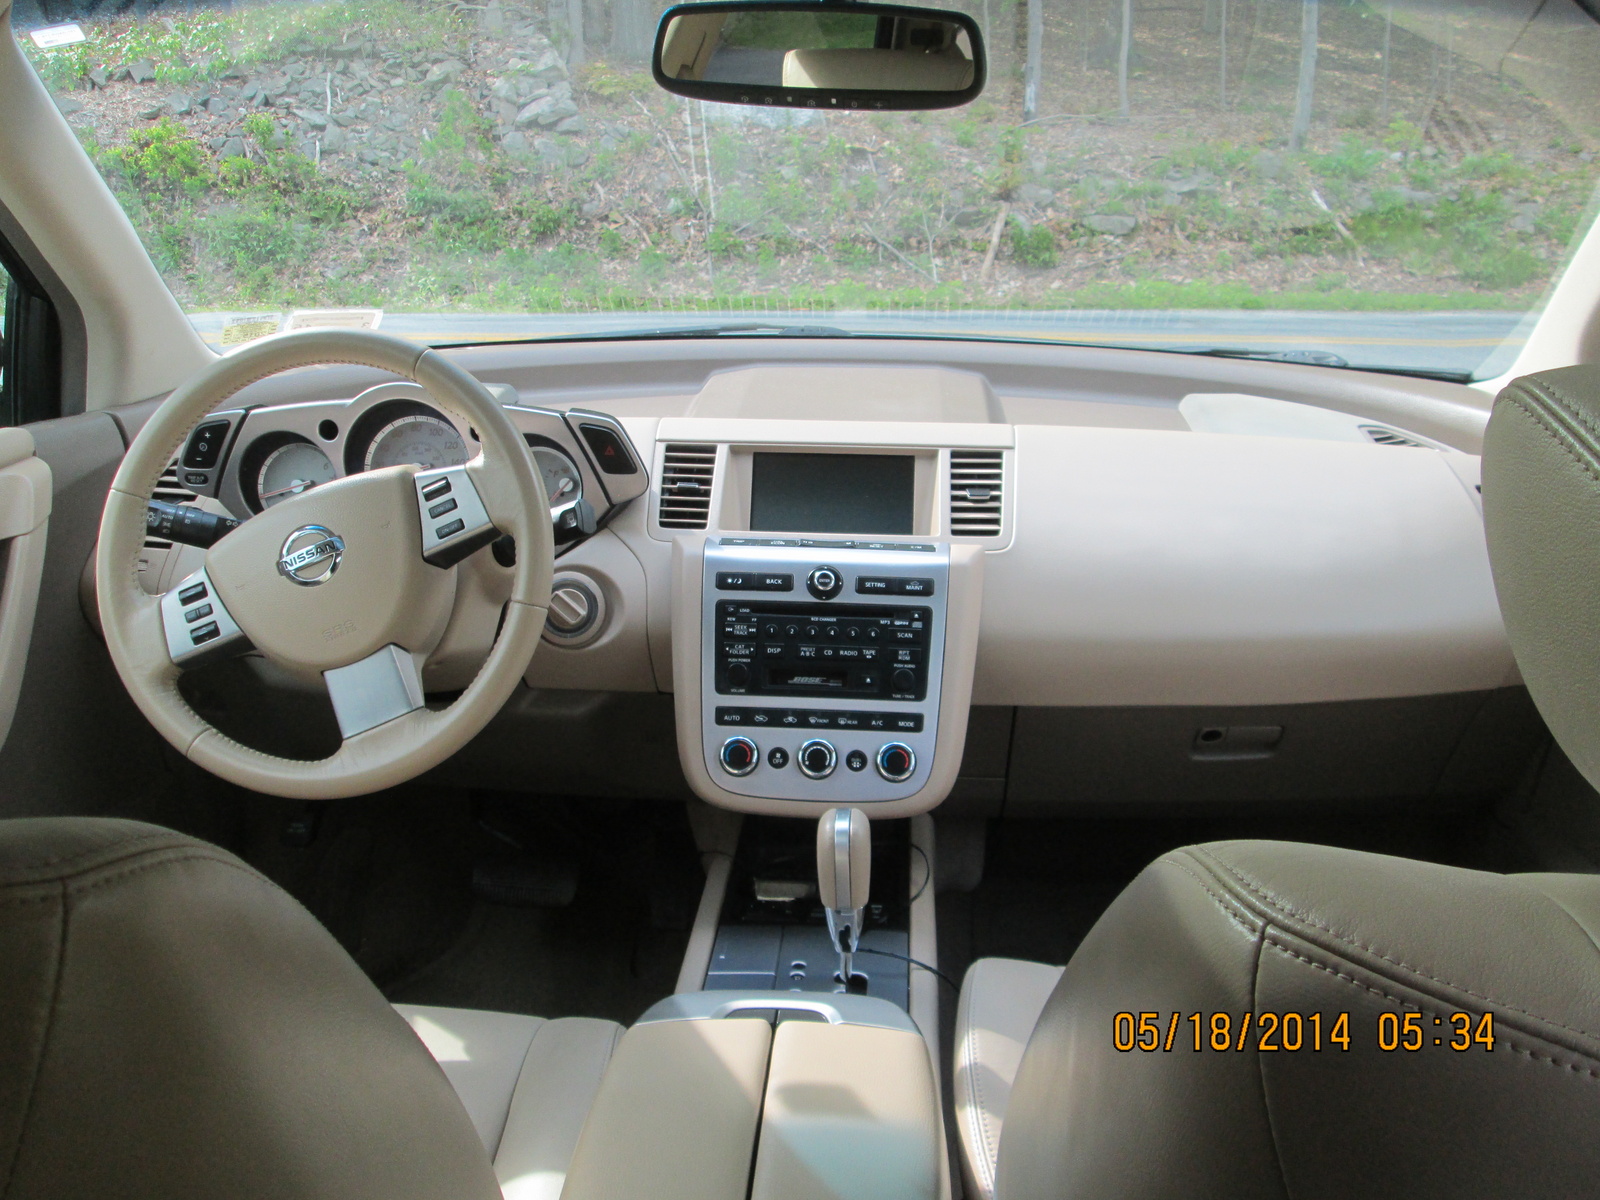 2007 Nissan murano interior photos #2